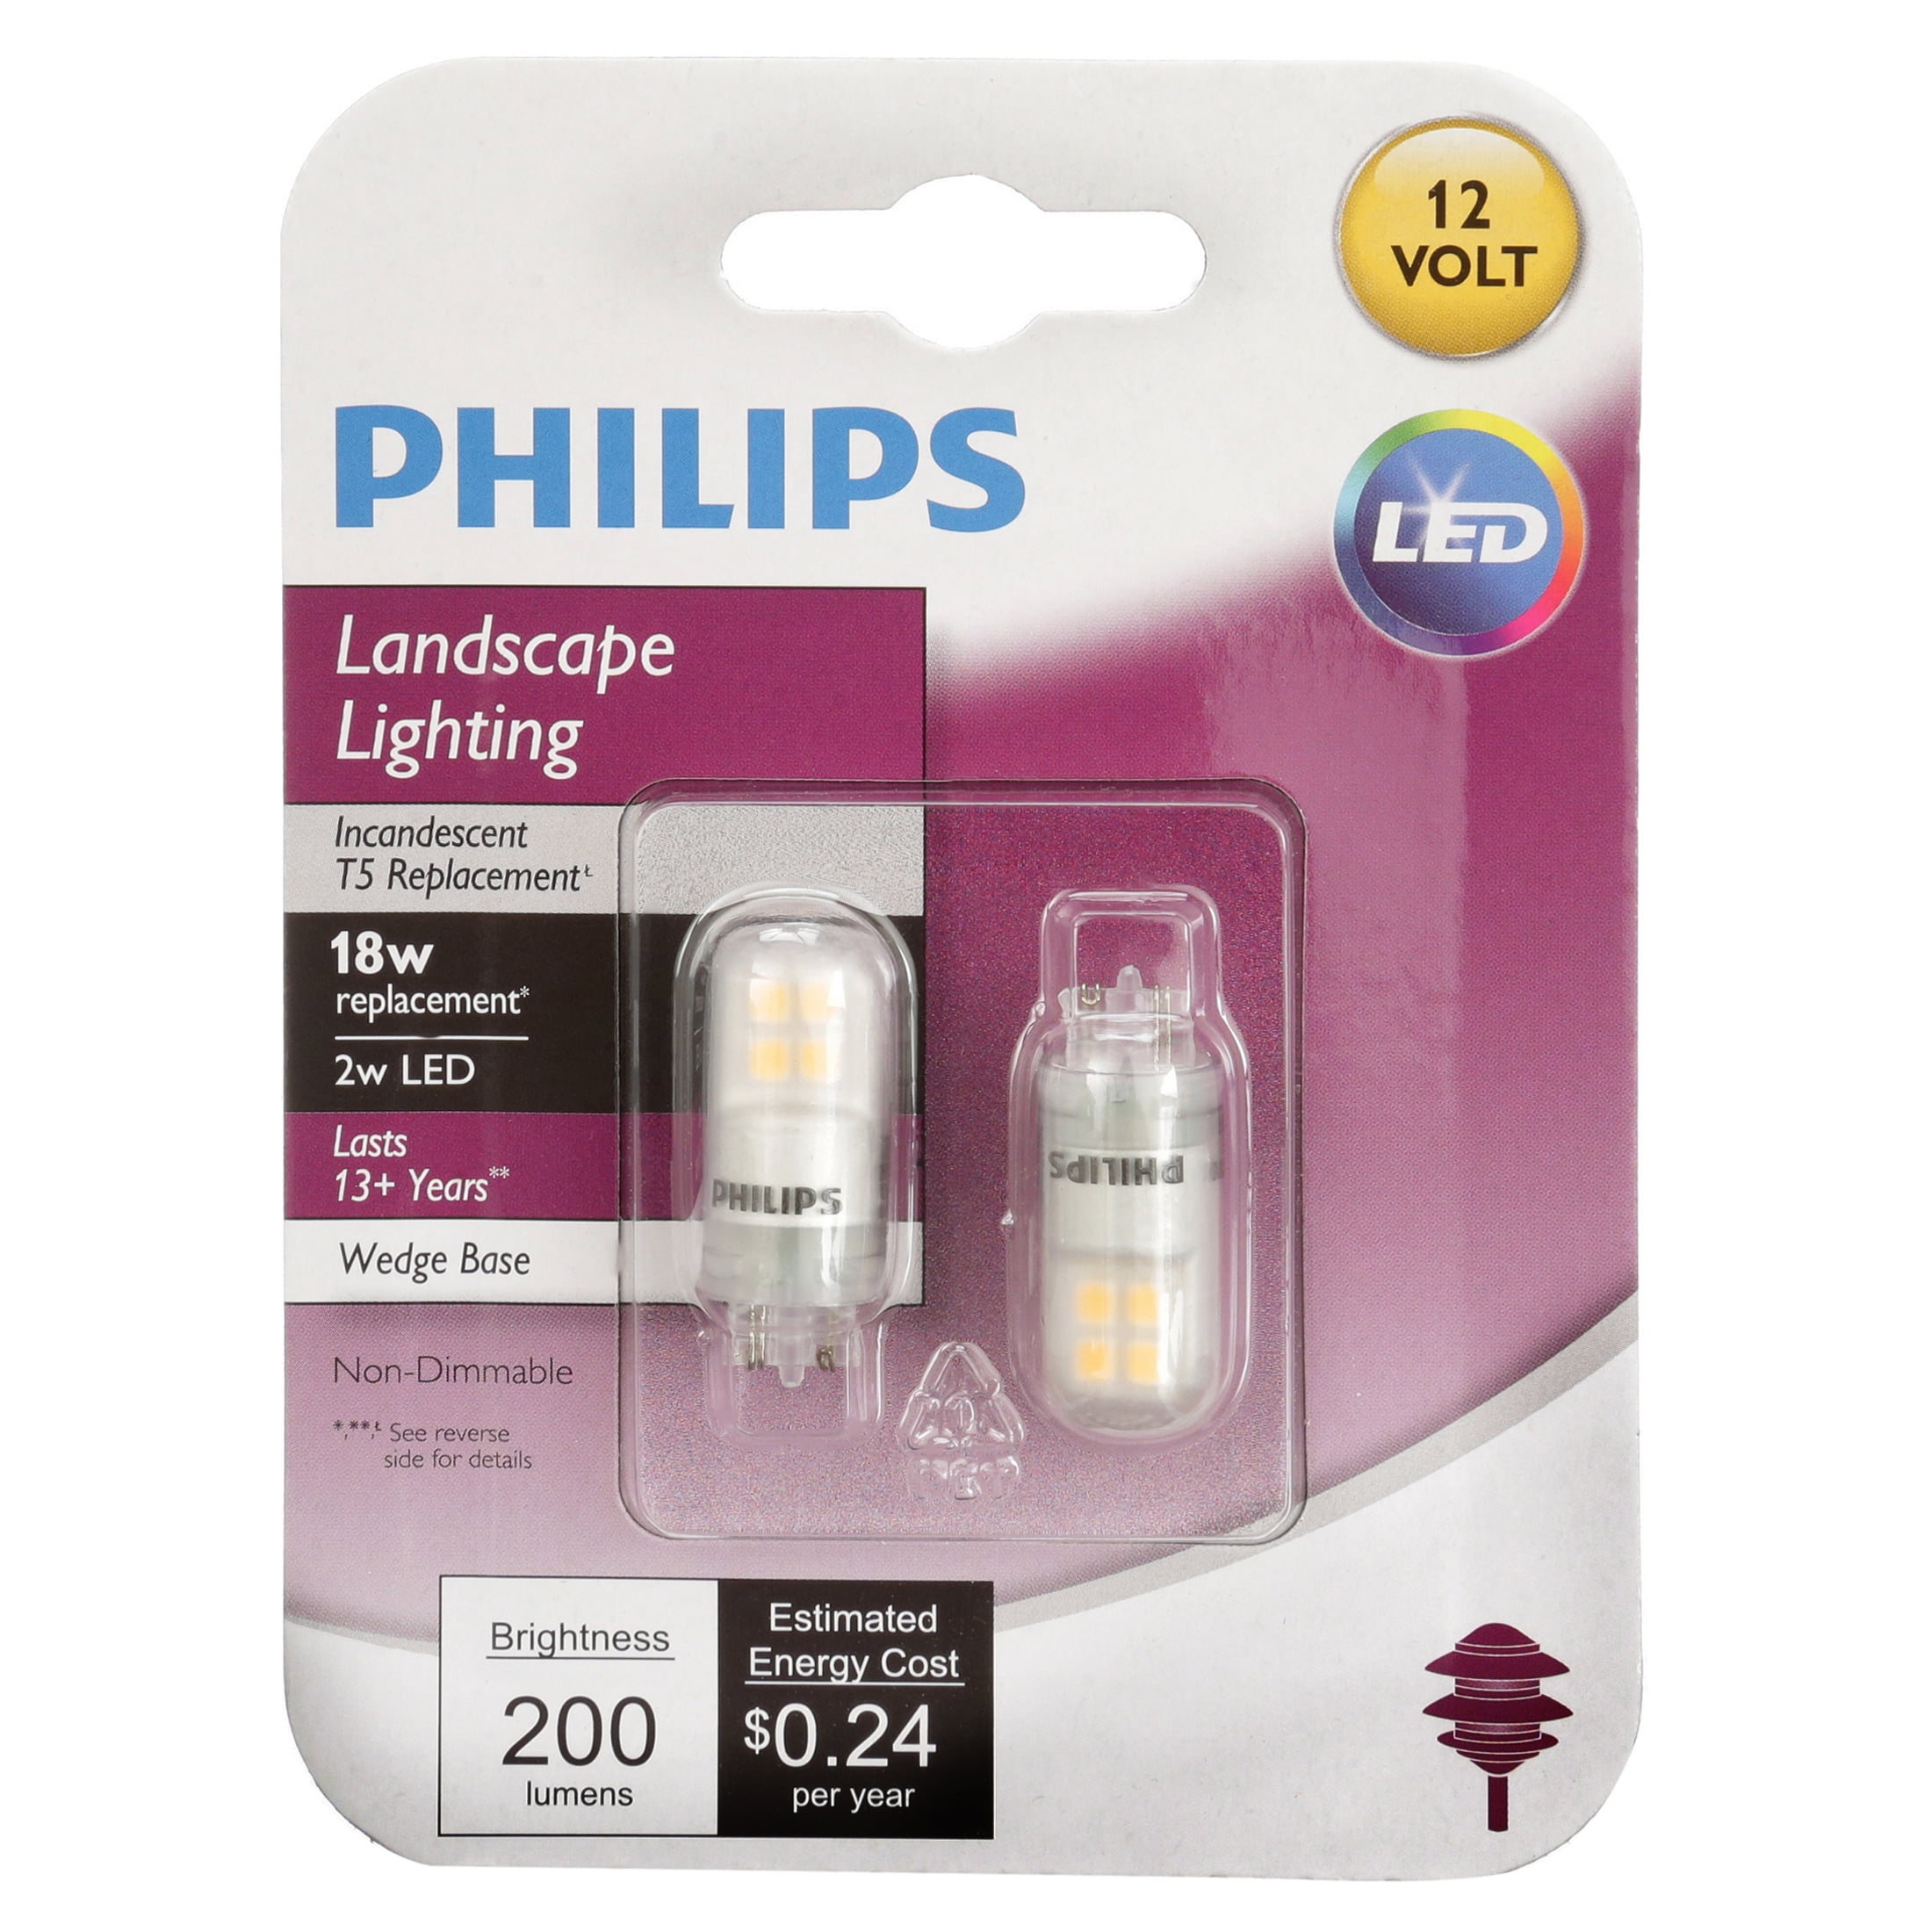 Green 9LED Landscape light bulbs Replaces 12v T5 Malibu bulbs 10 